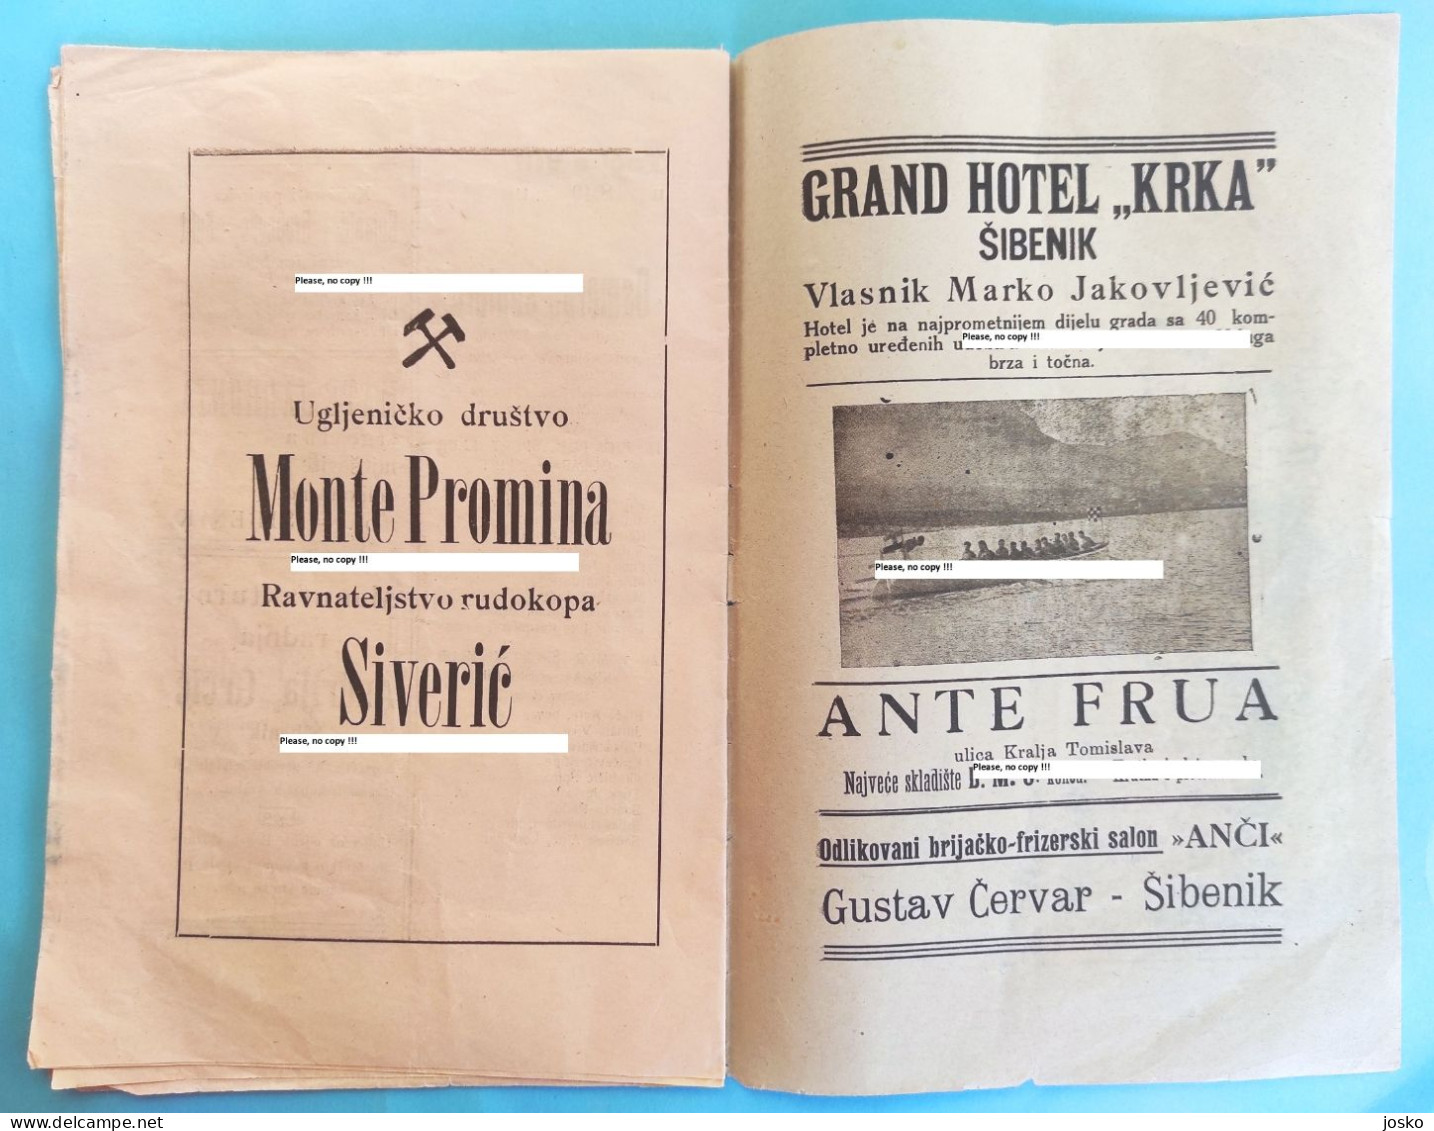 JADRANSKE VESLAČKE REGATE ŠIBENIK 1934 - Croatia rowing programme * aviron rudersport rudern ruder canottaggio programm